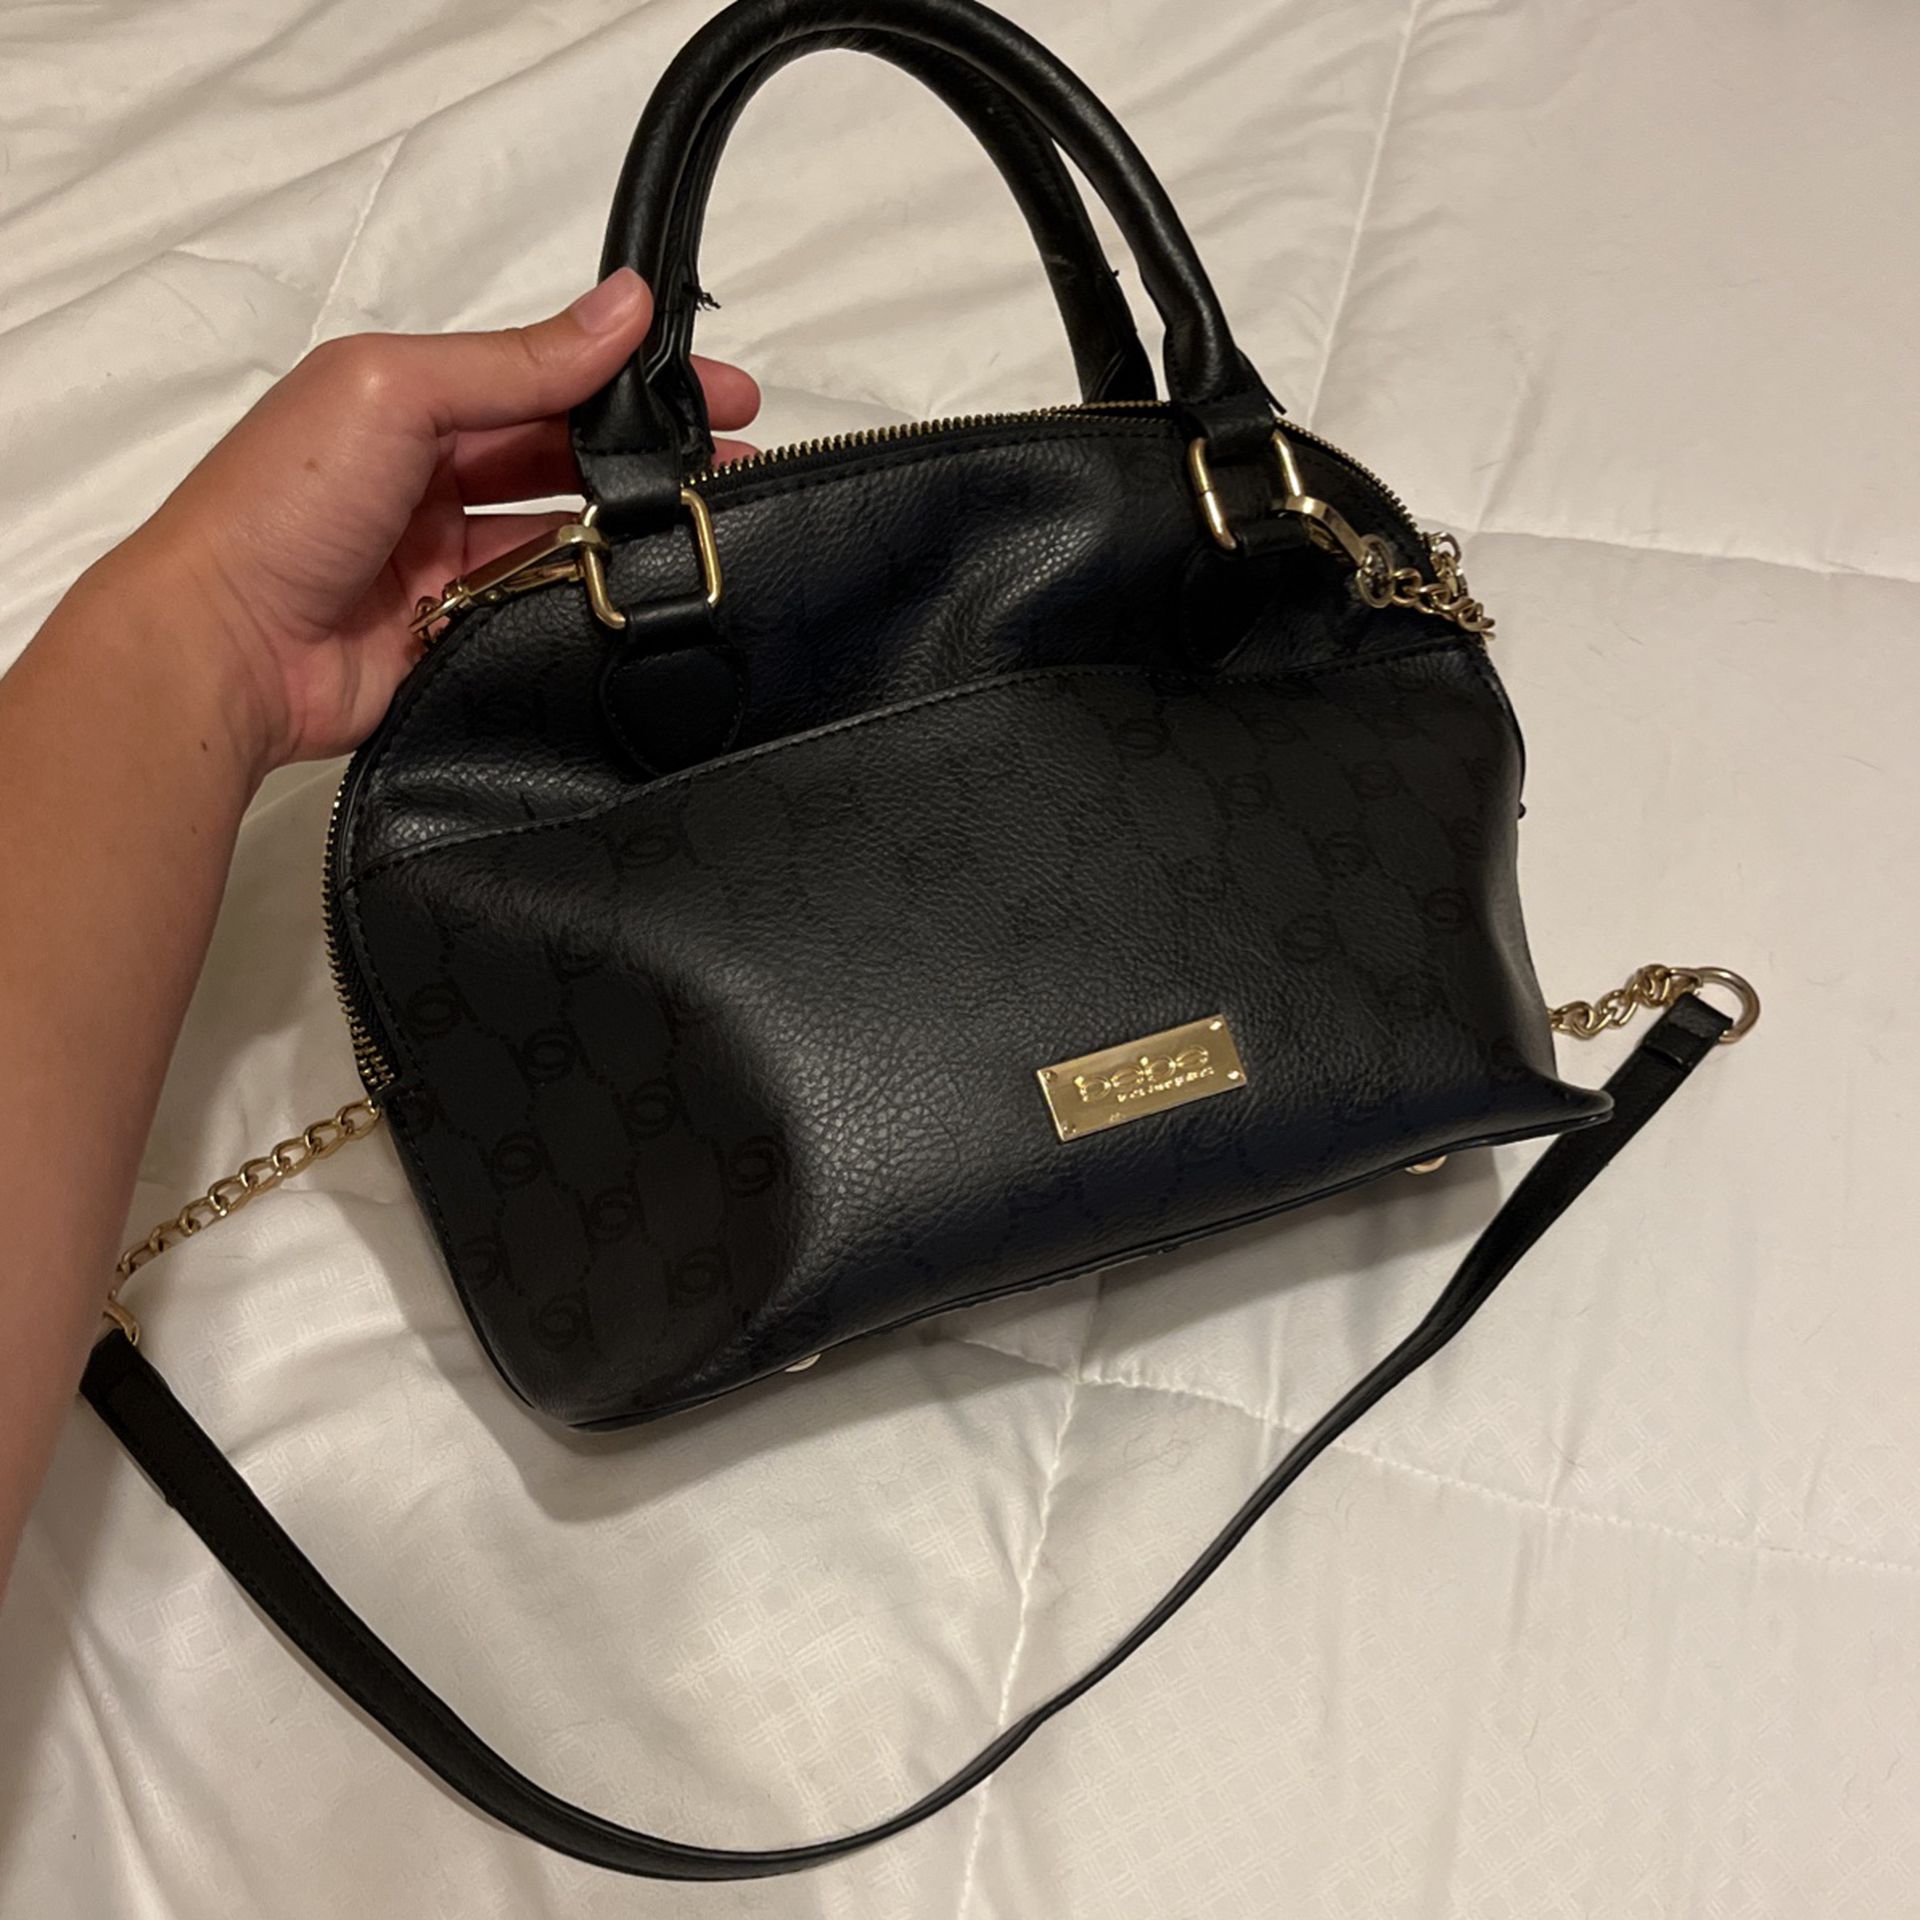 Bebe Black Purse Handbag